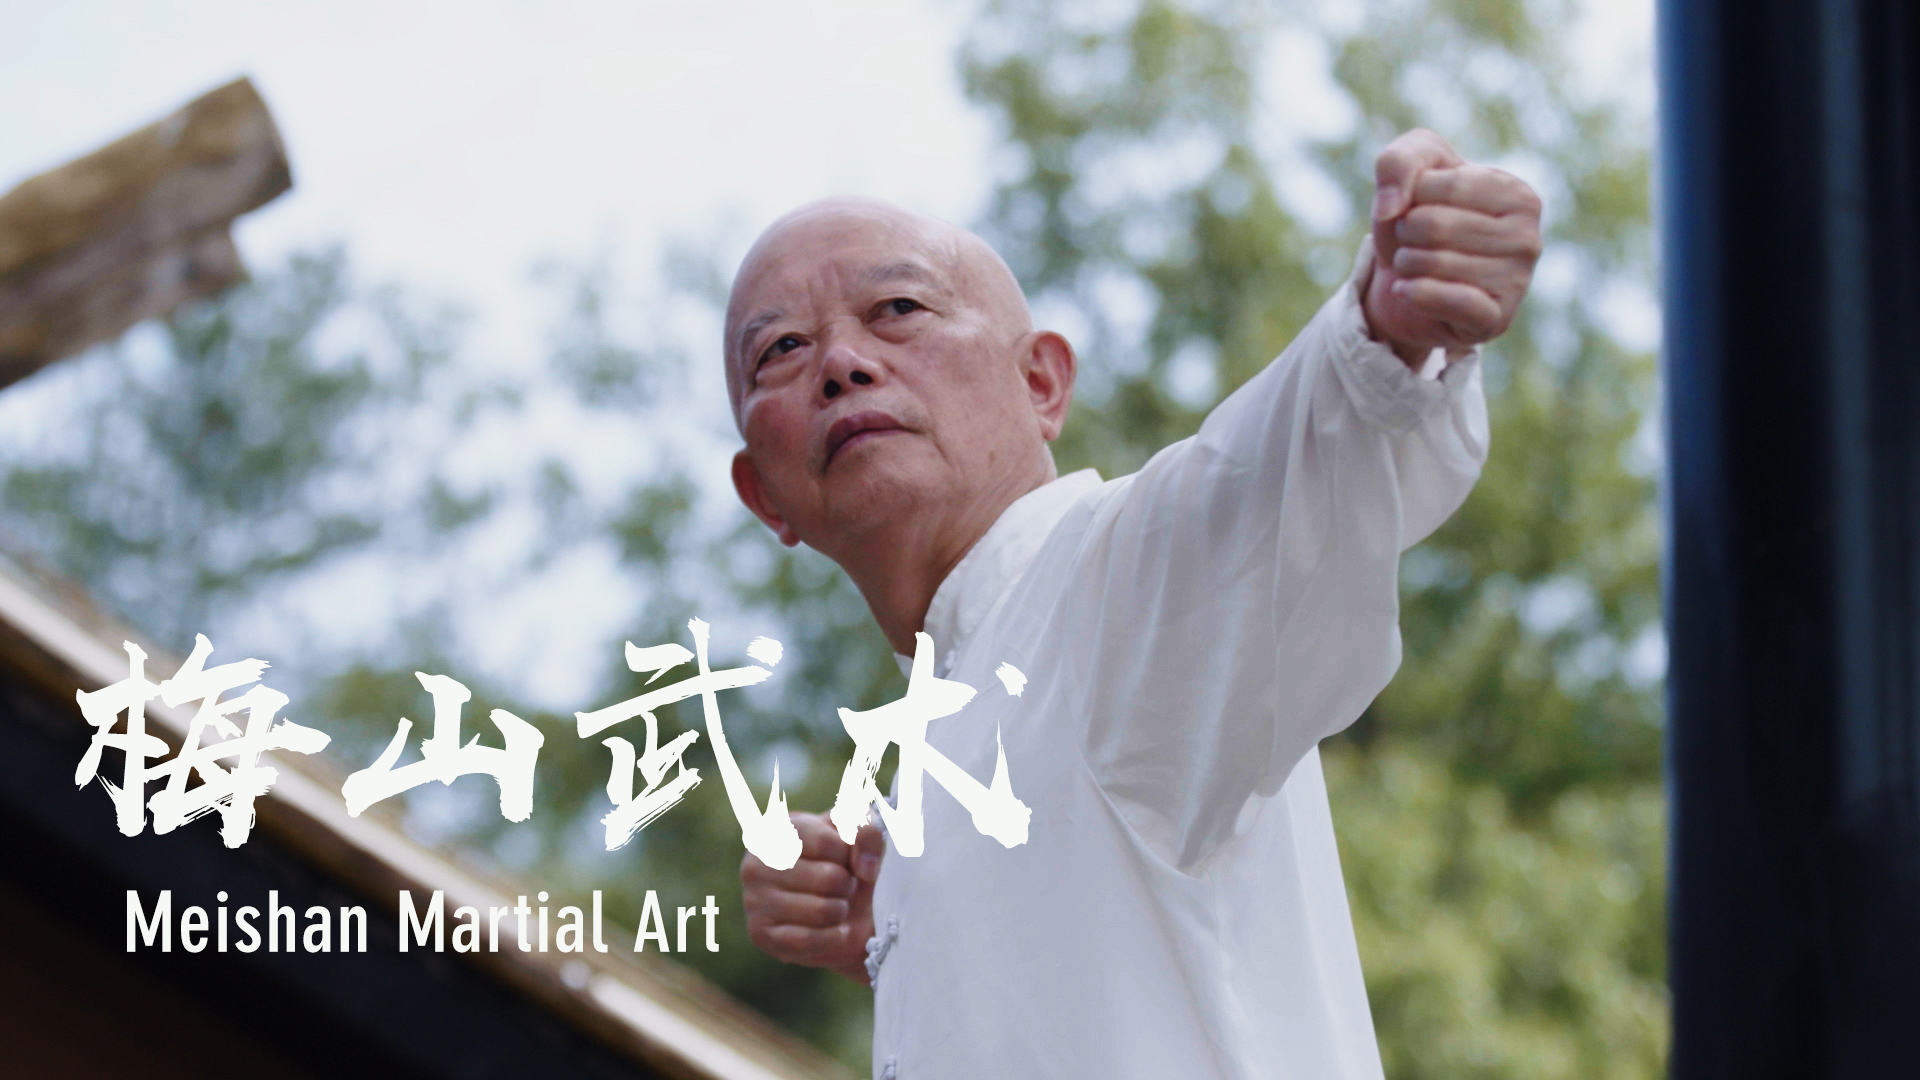 Meishan martial art: Unique fist positions - CGTN